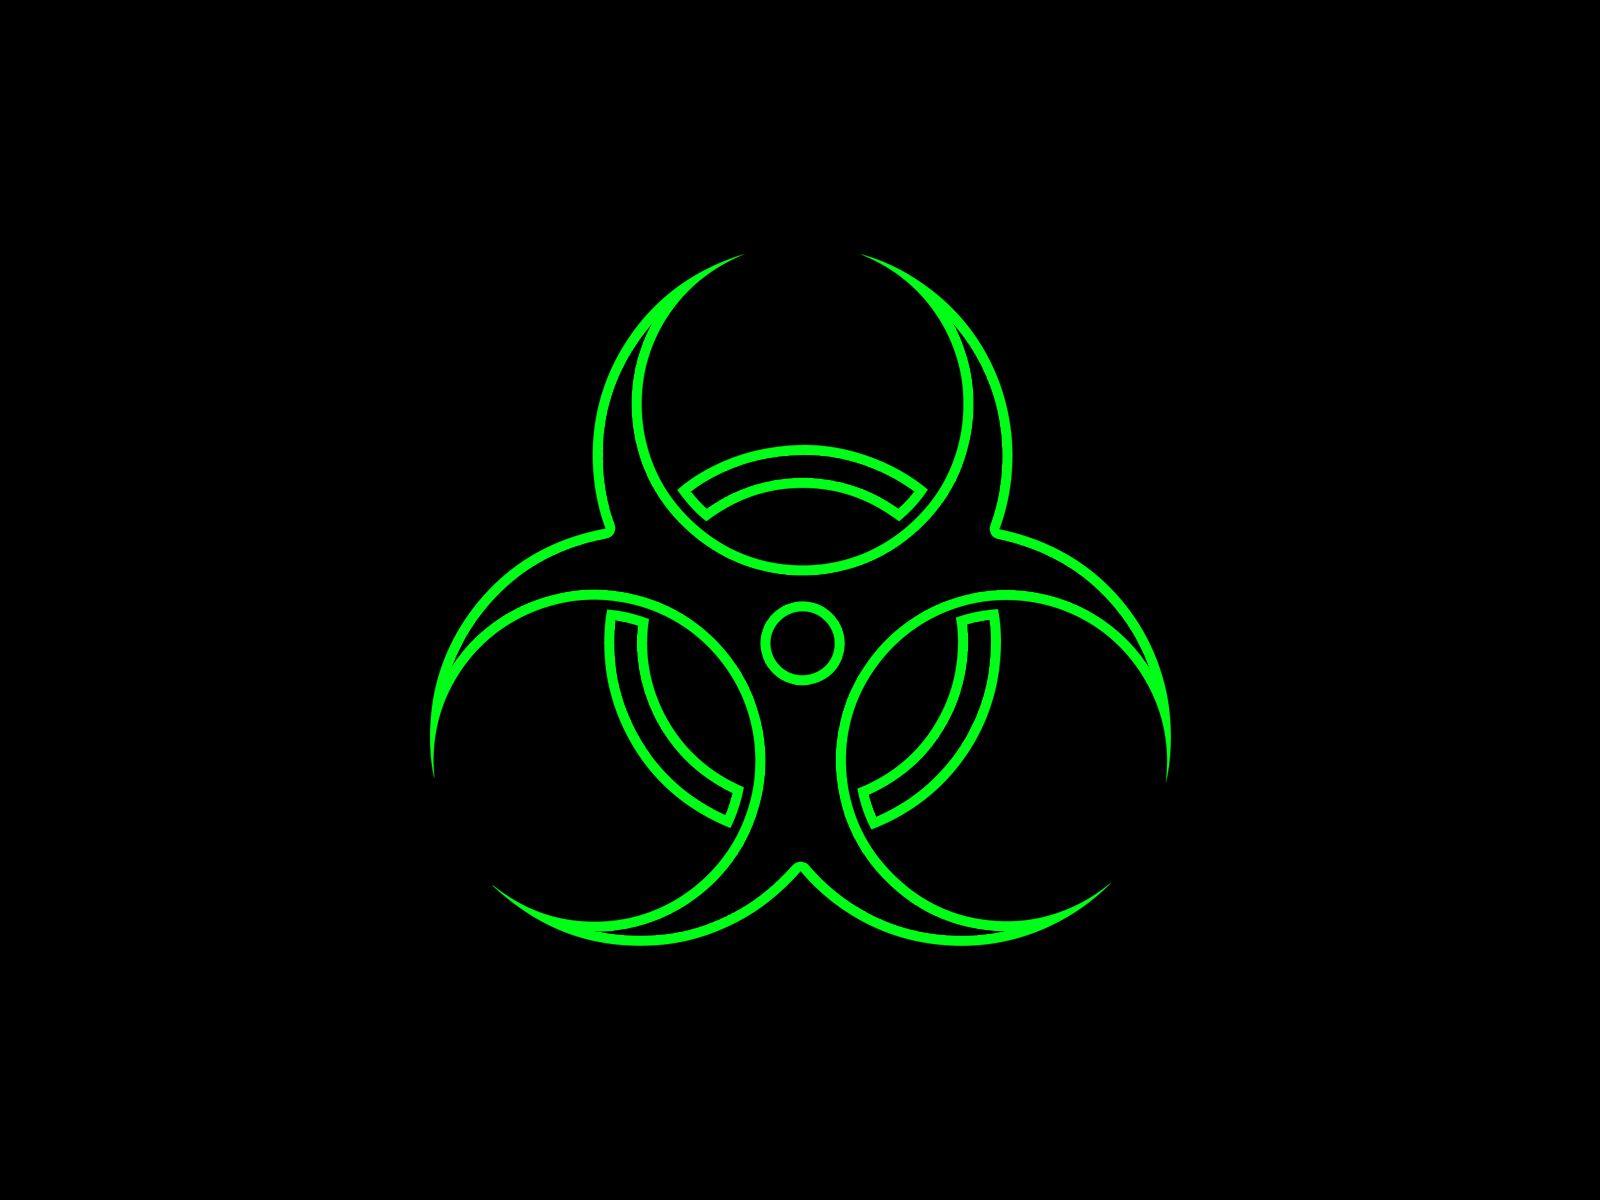 Radioactive Logo - 74+] Radioactive Symbol Wallpaper on WallpaperSafari